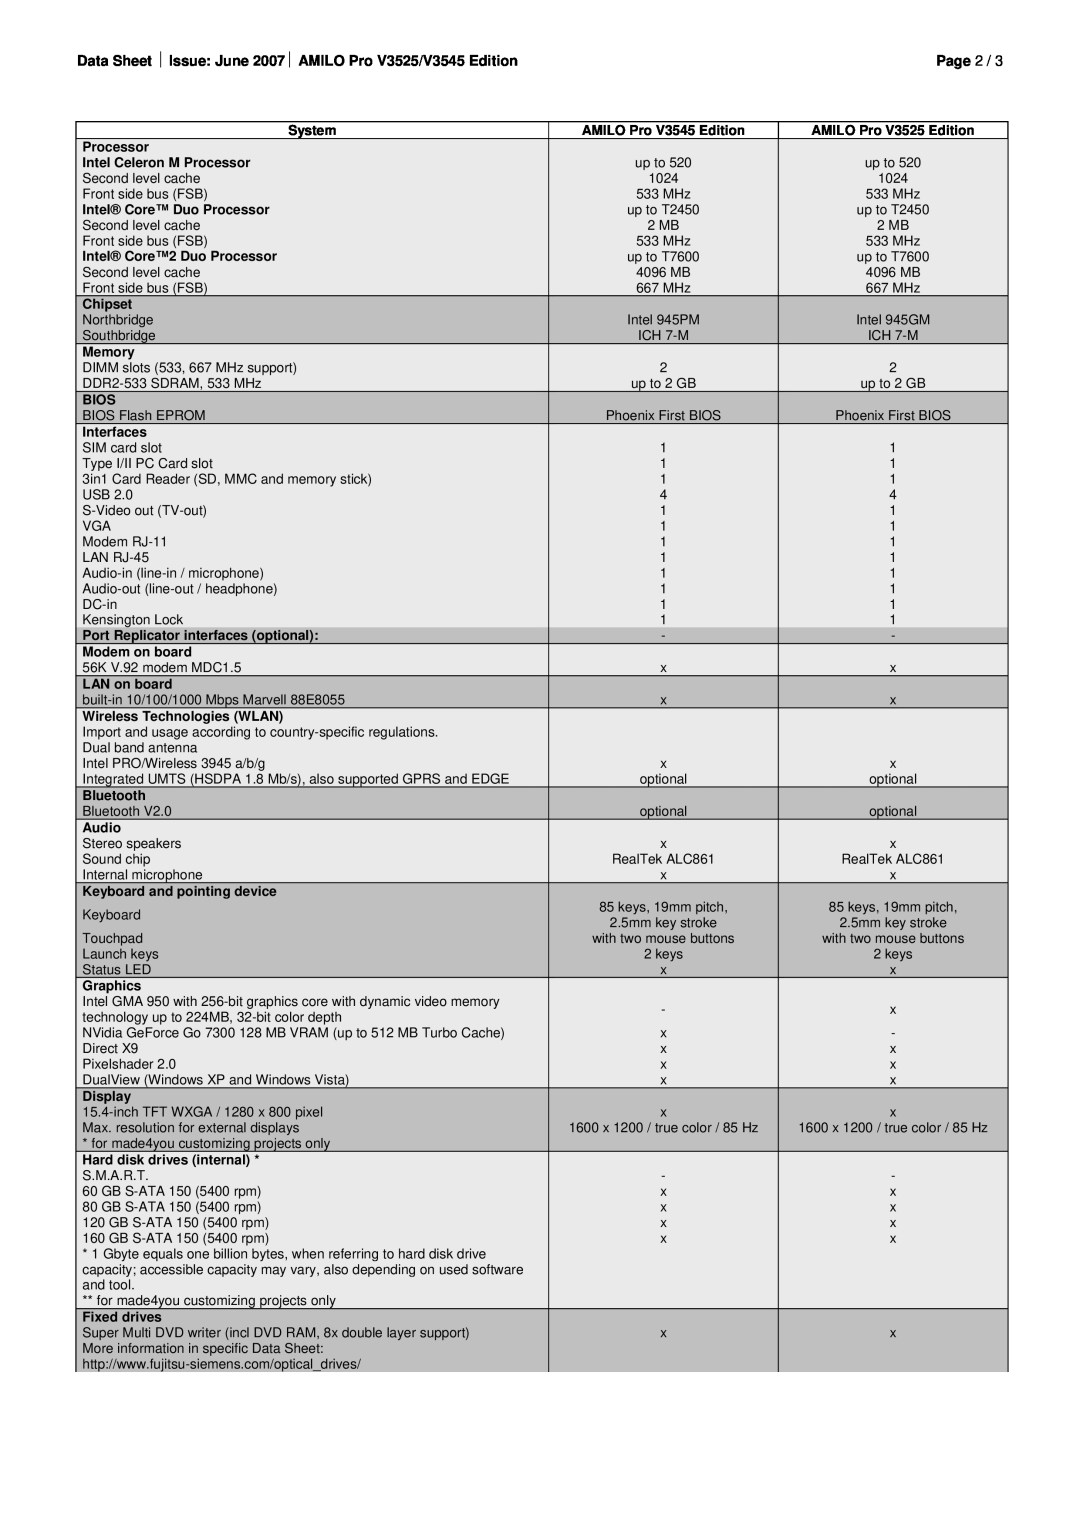 Fujitsu Siemens Computers Laptop PC manual Data Sheet Issue June 2007 AMILO Pro V3525/V3545 Edition, Page 